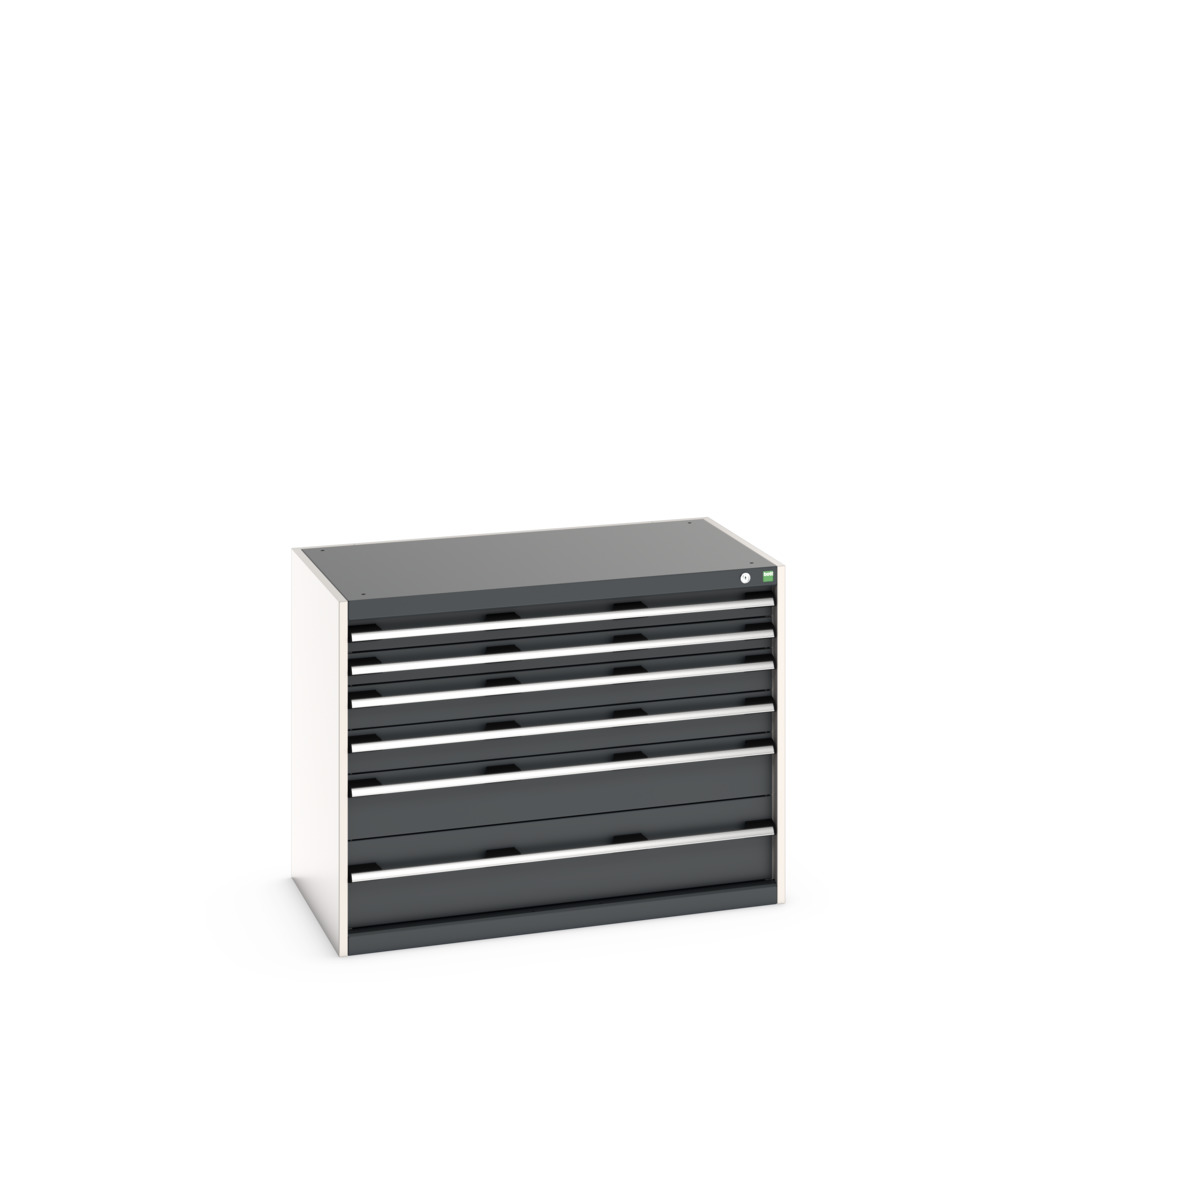 40021191. - cubio drawer cabinet